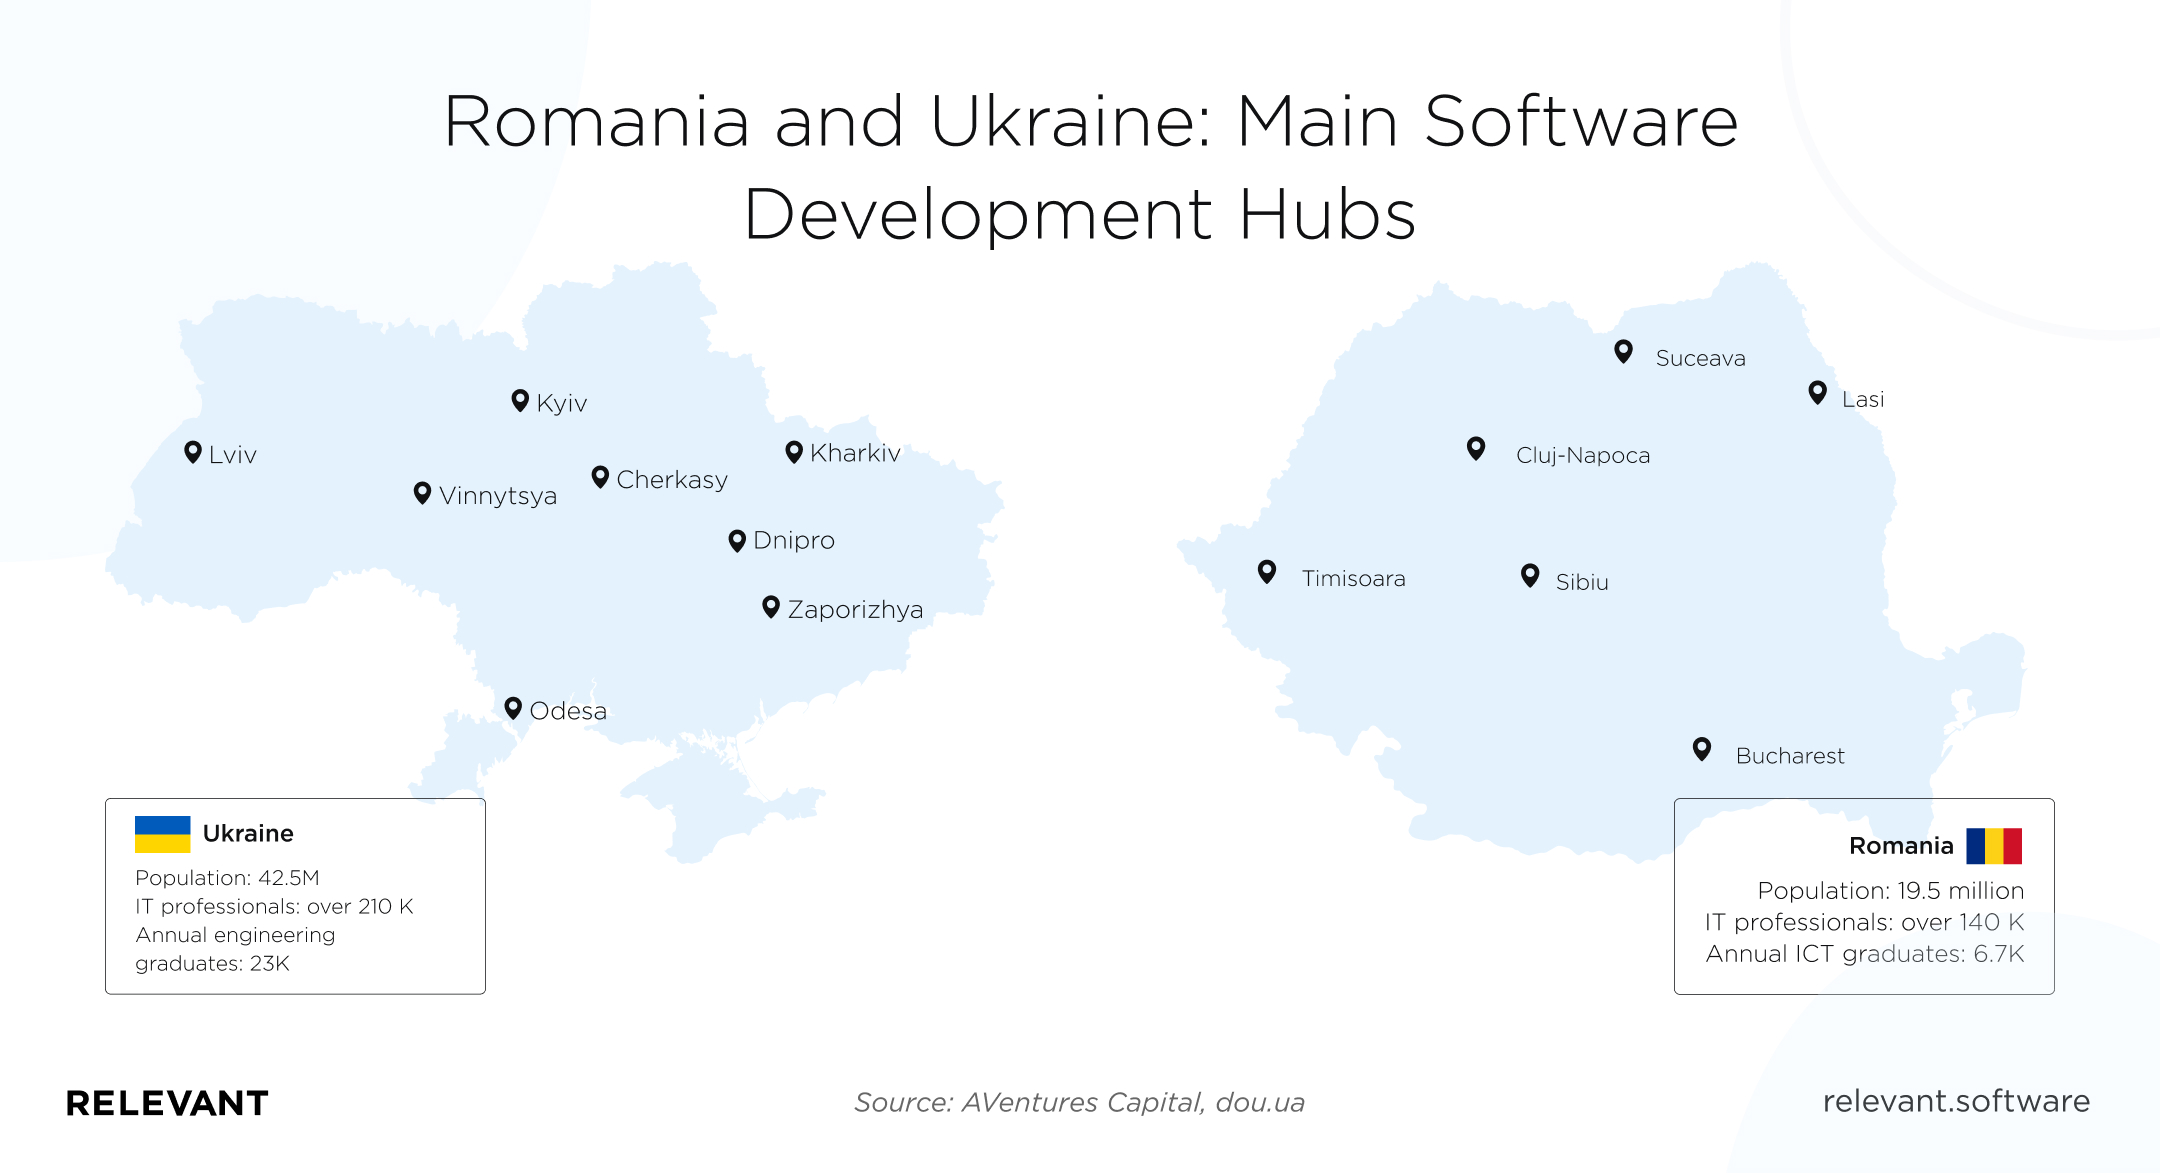 Romania vs Ukraine as main software development hubs